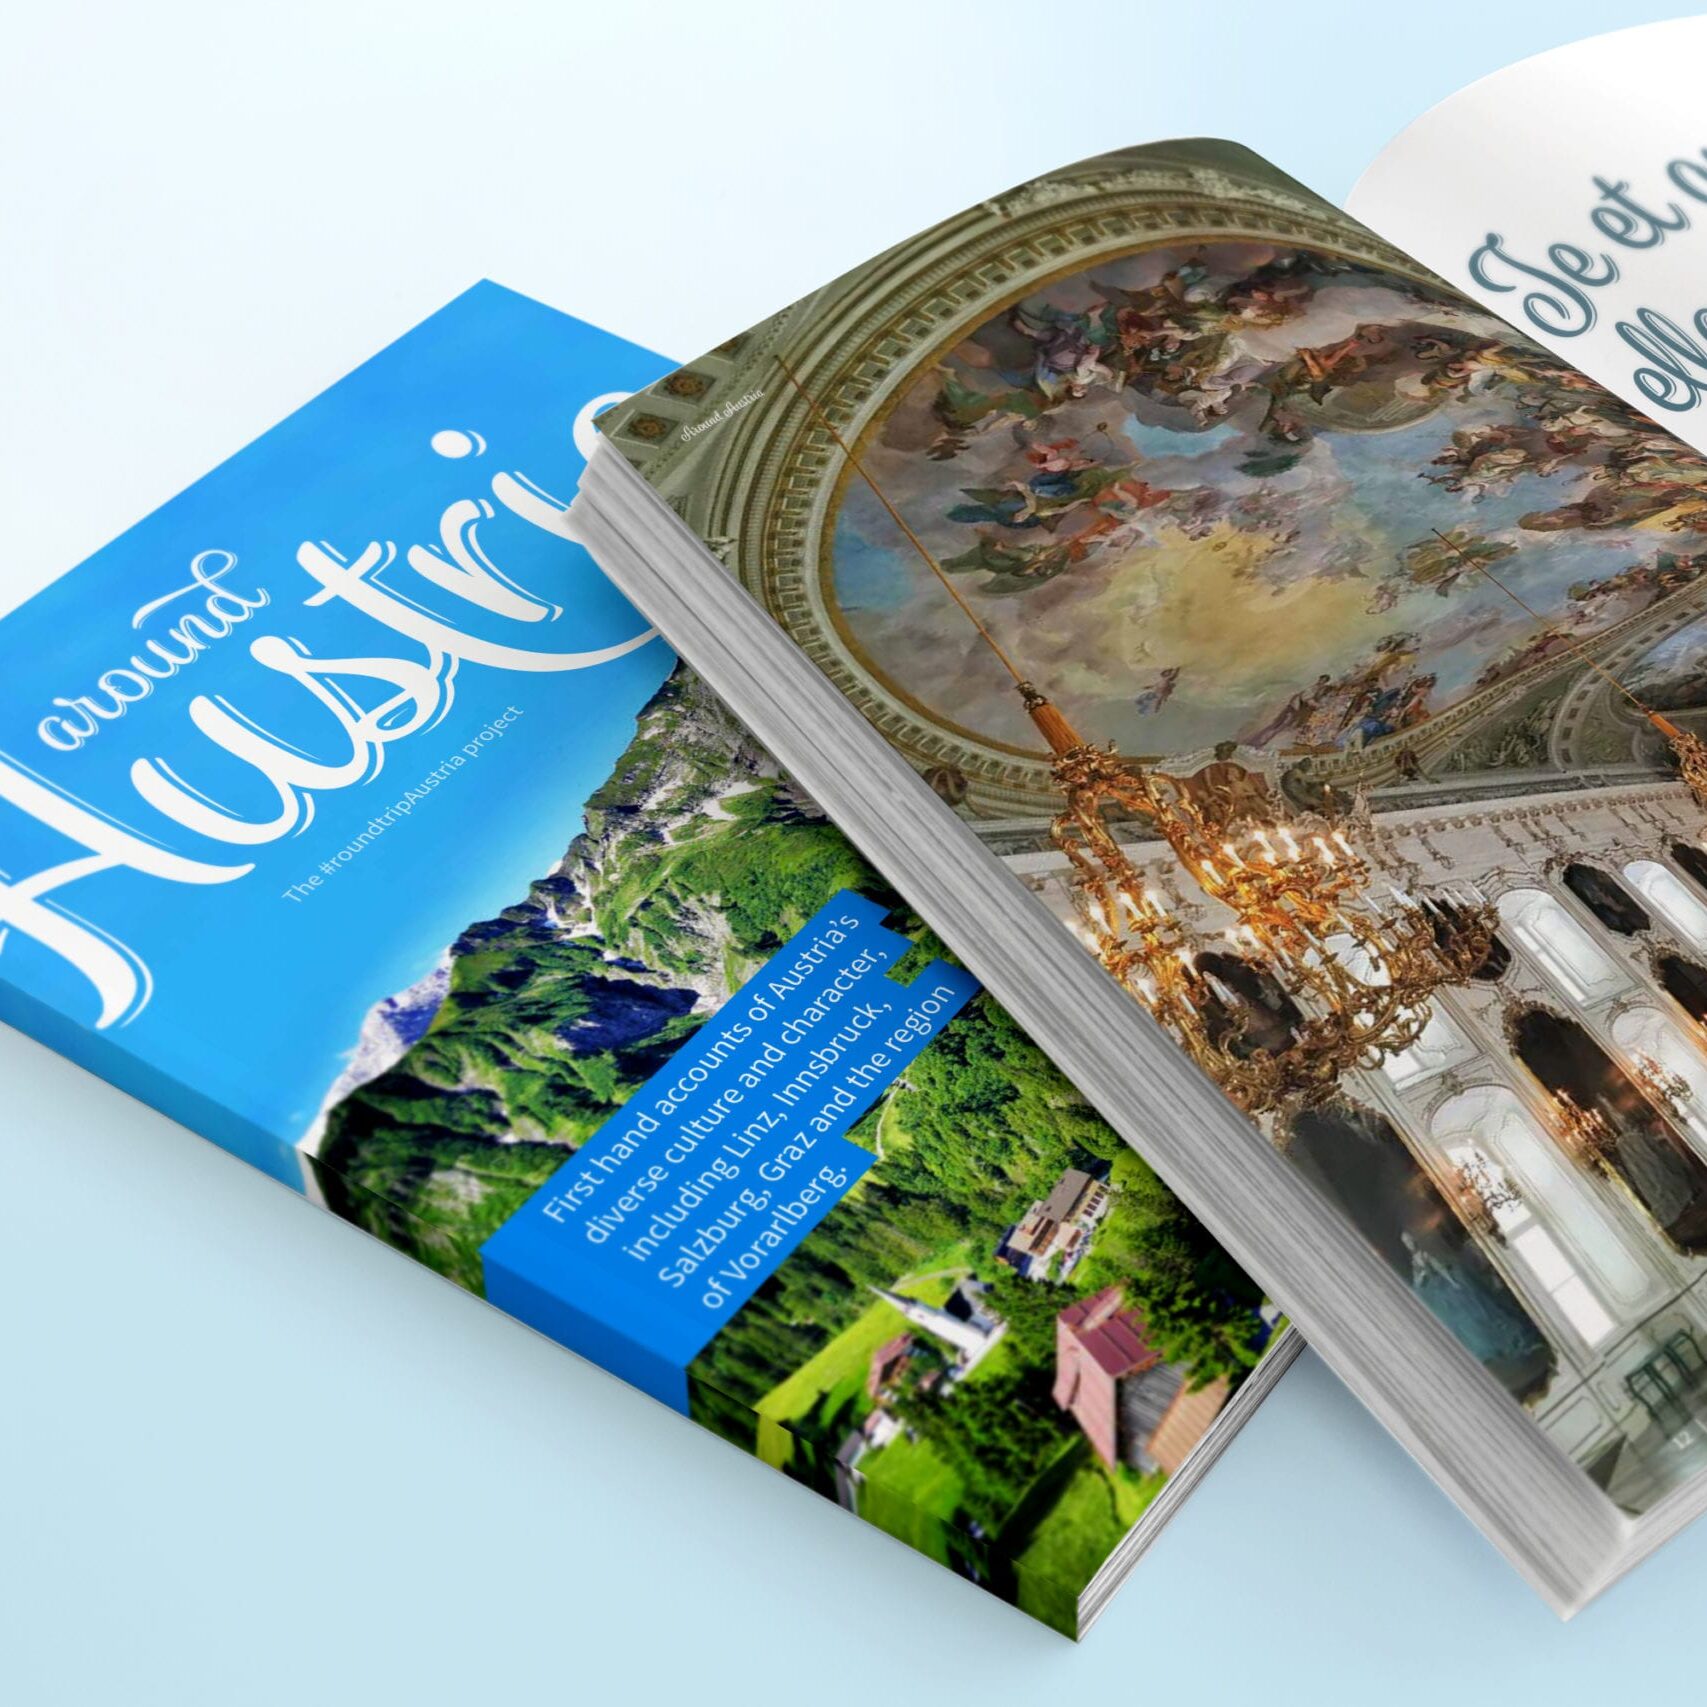 Design for an Austrian Travel magazine